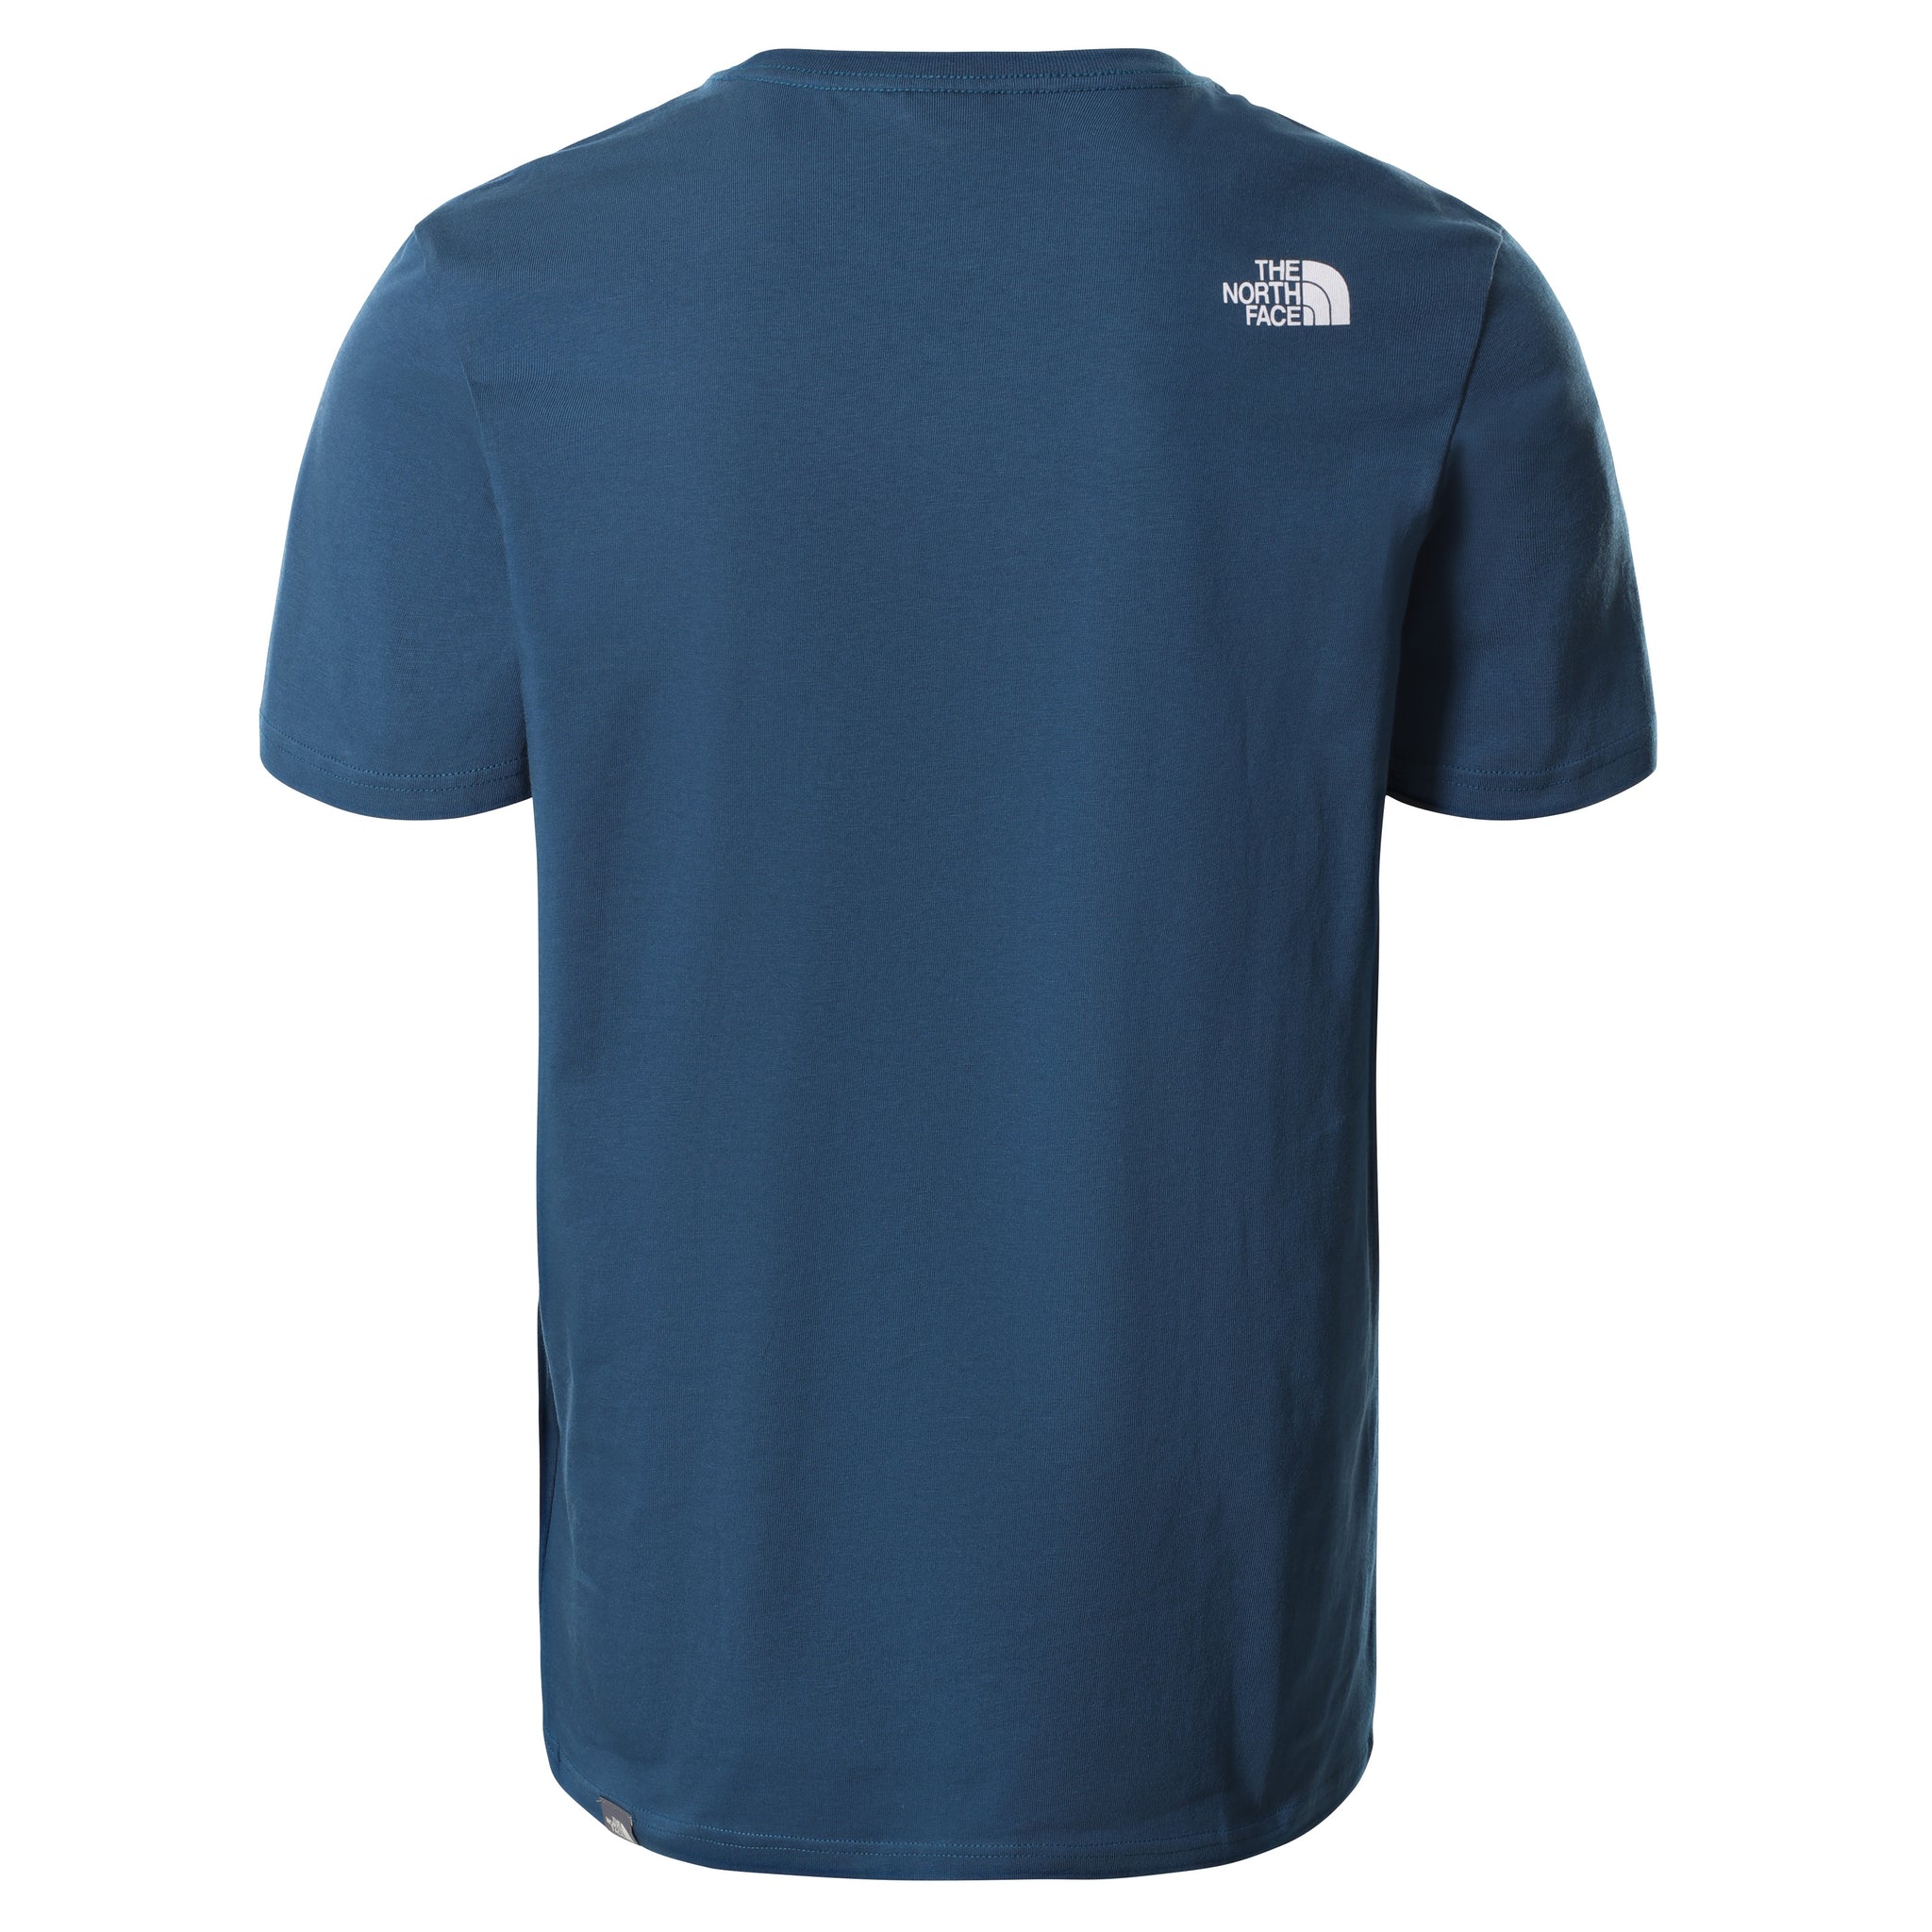 T-Shirt The North Face Uomo / Blu - Ideal Moda